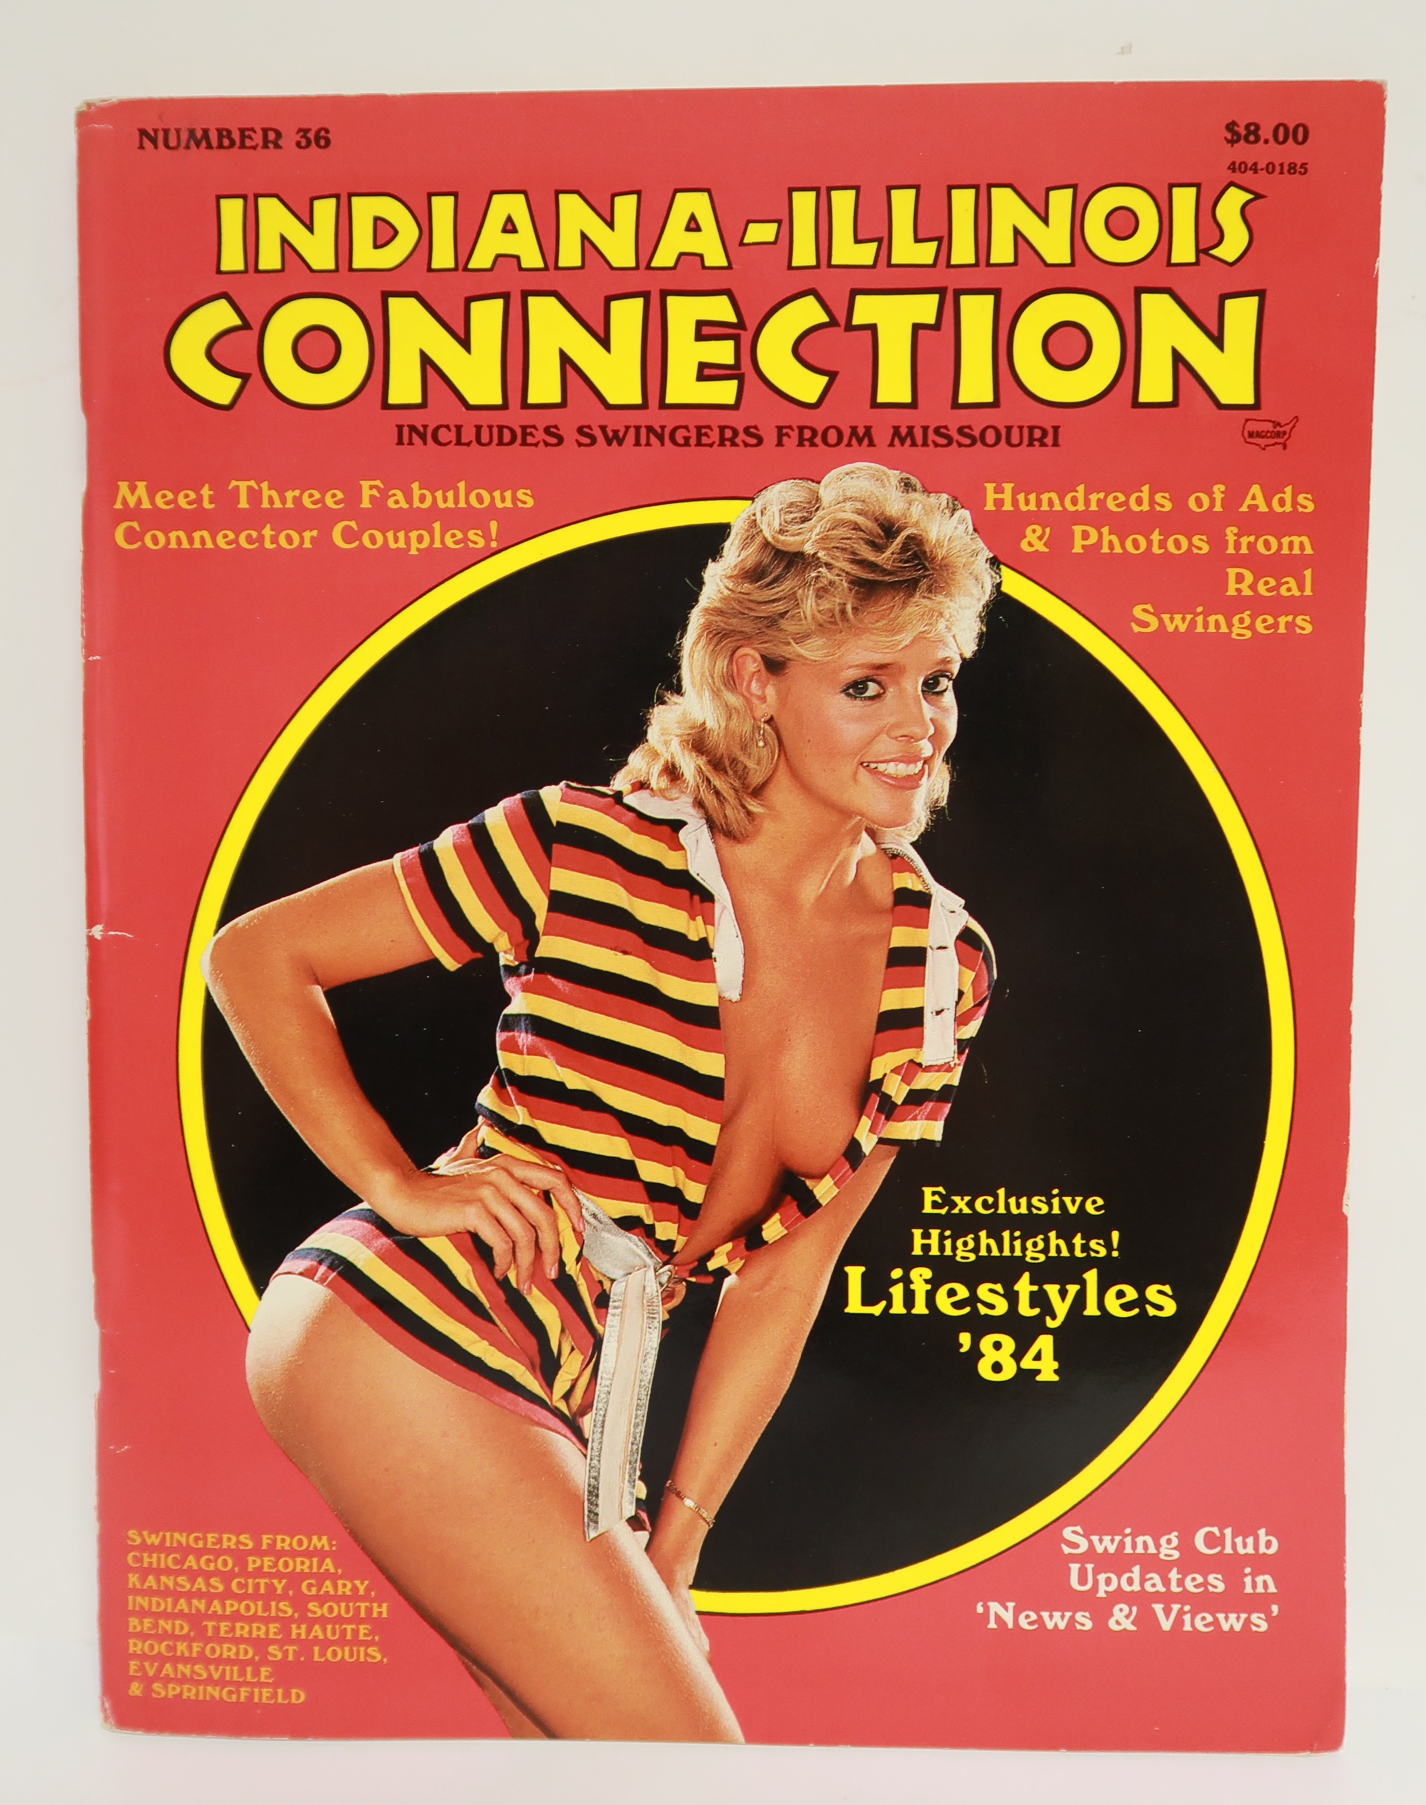 Indiana Illinois Connection Swingers from Missouri 1985 No image